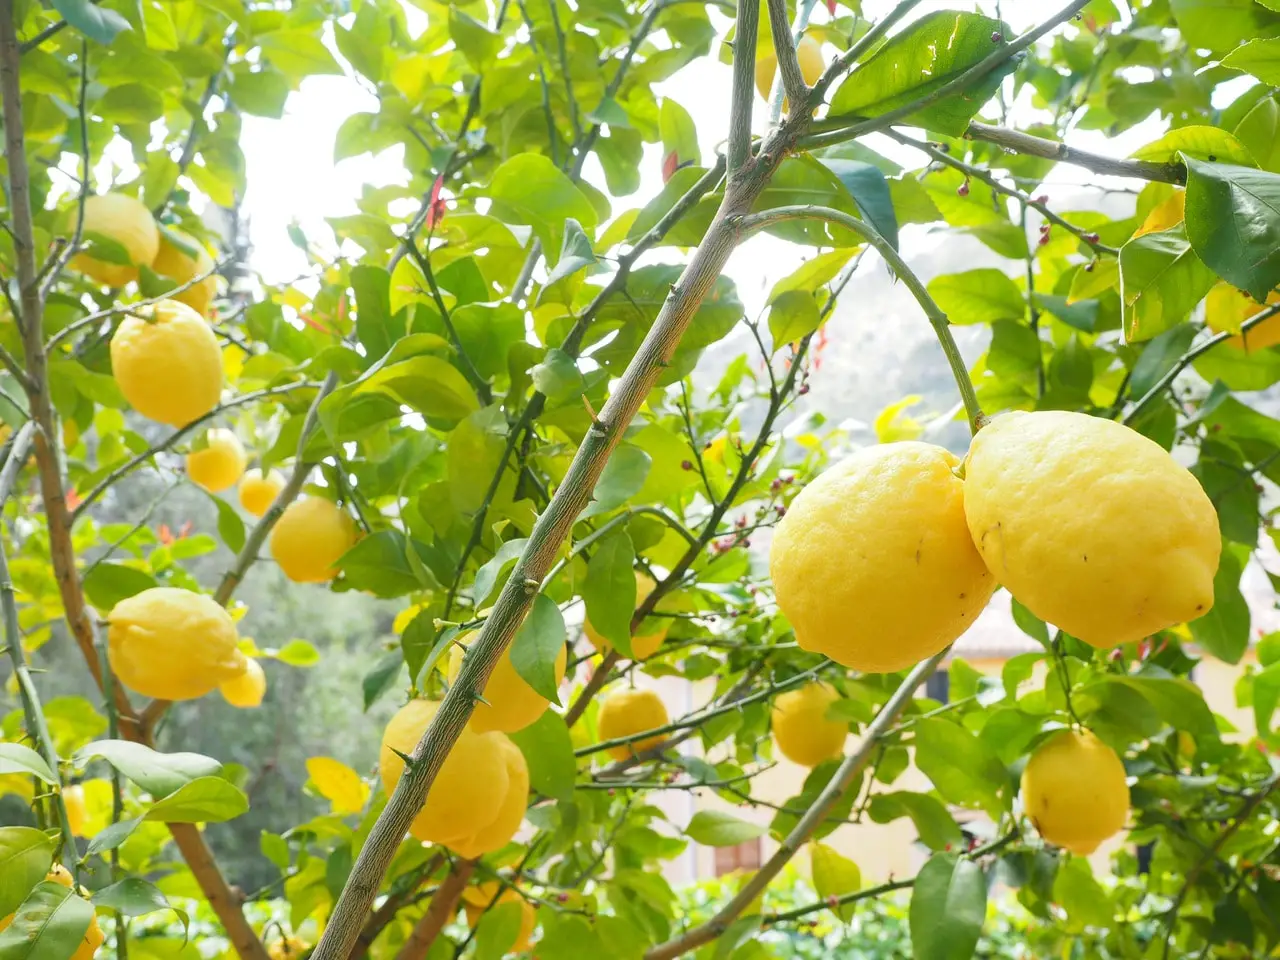 When to plant lemon tree